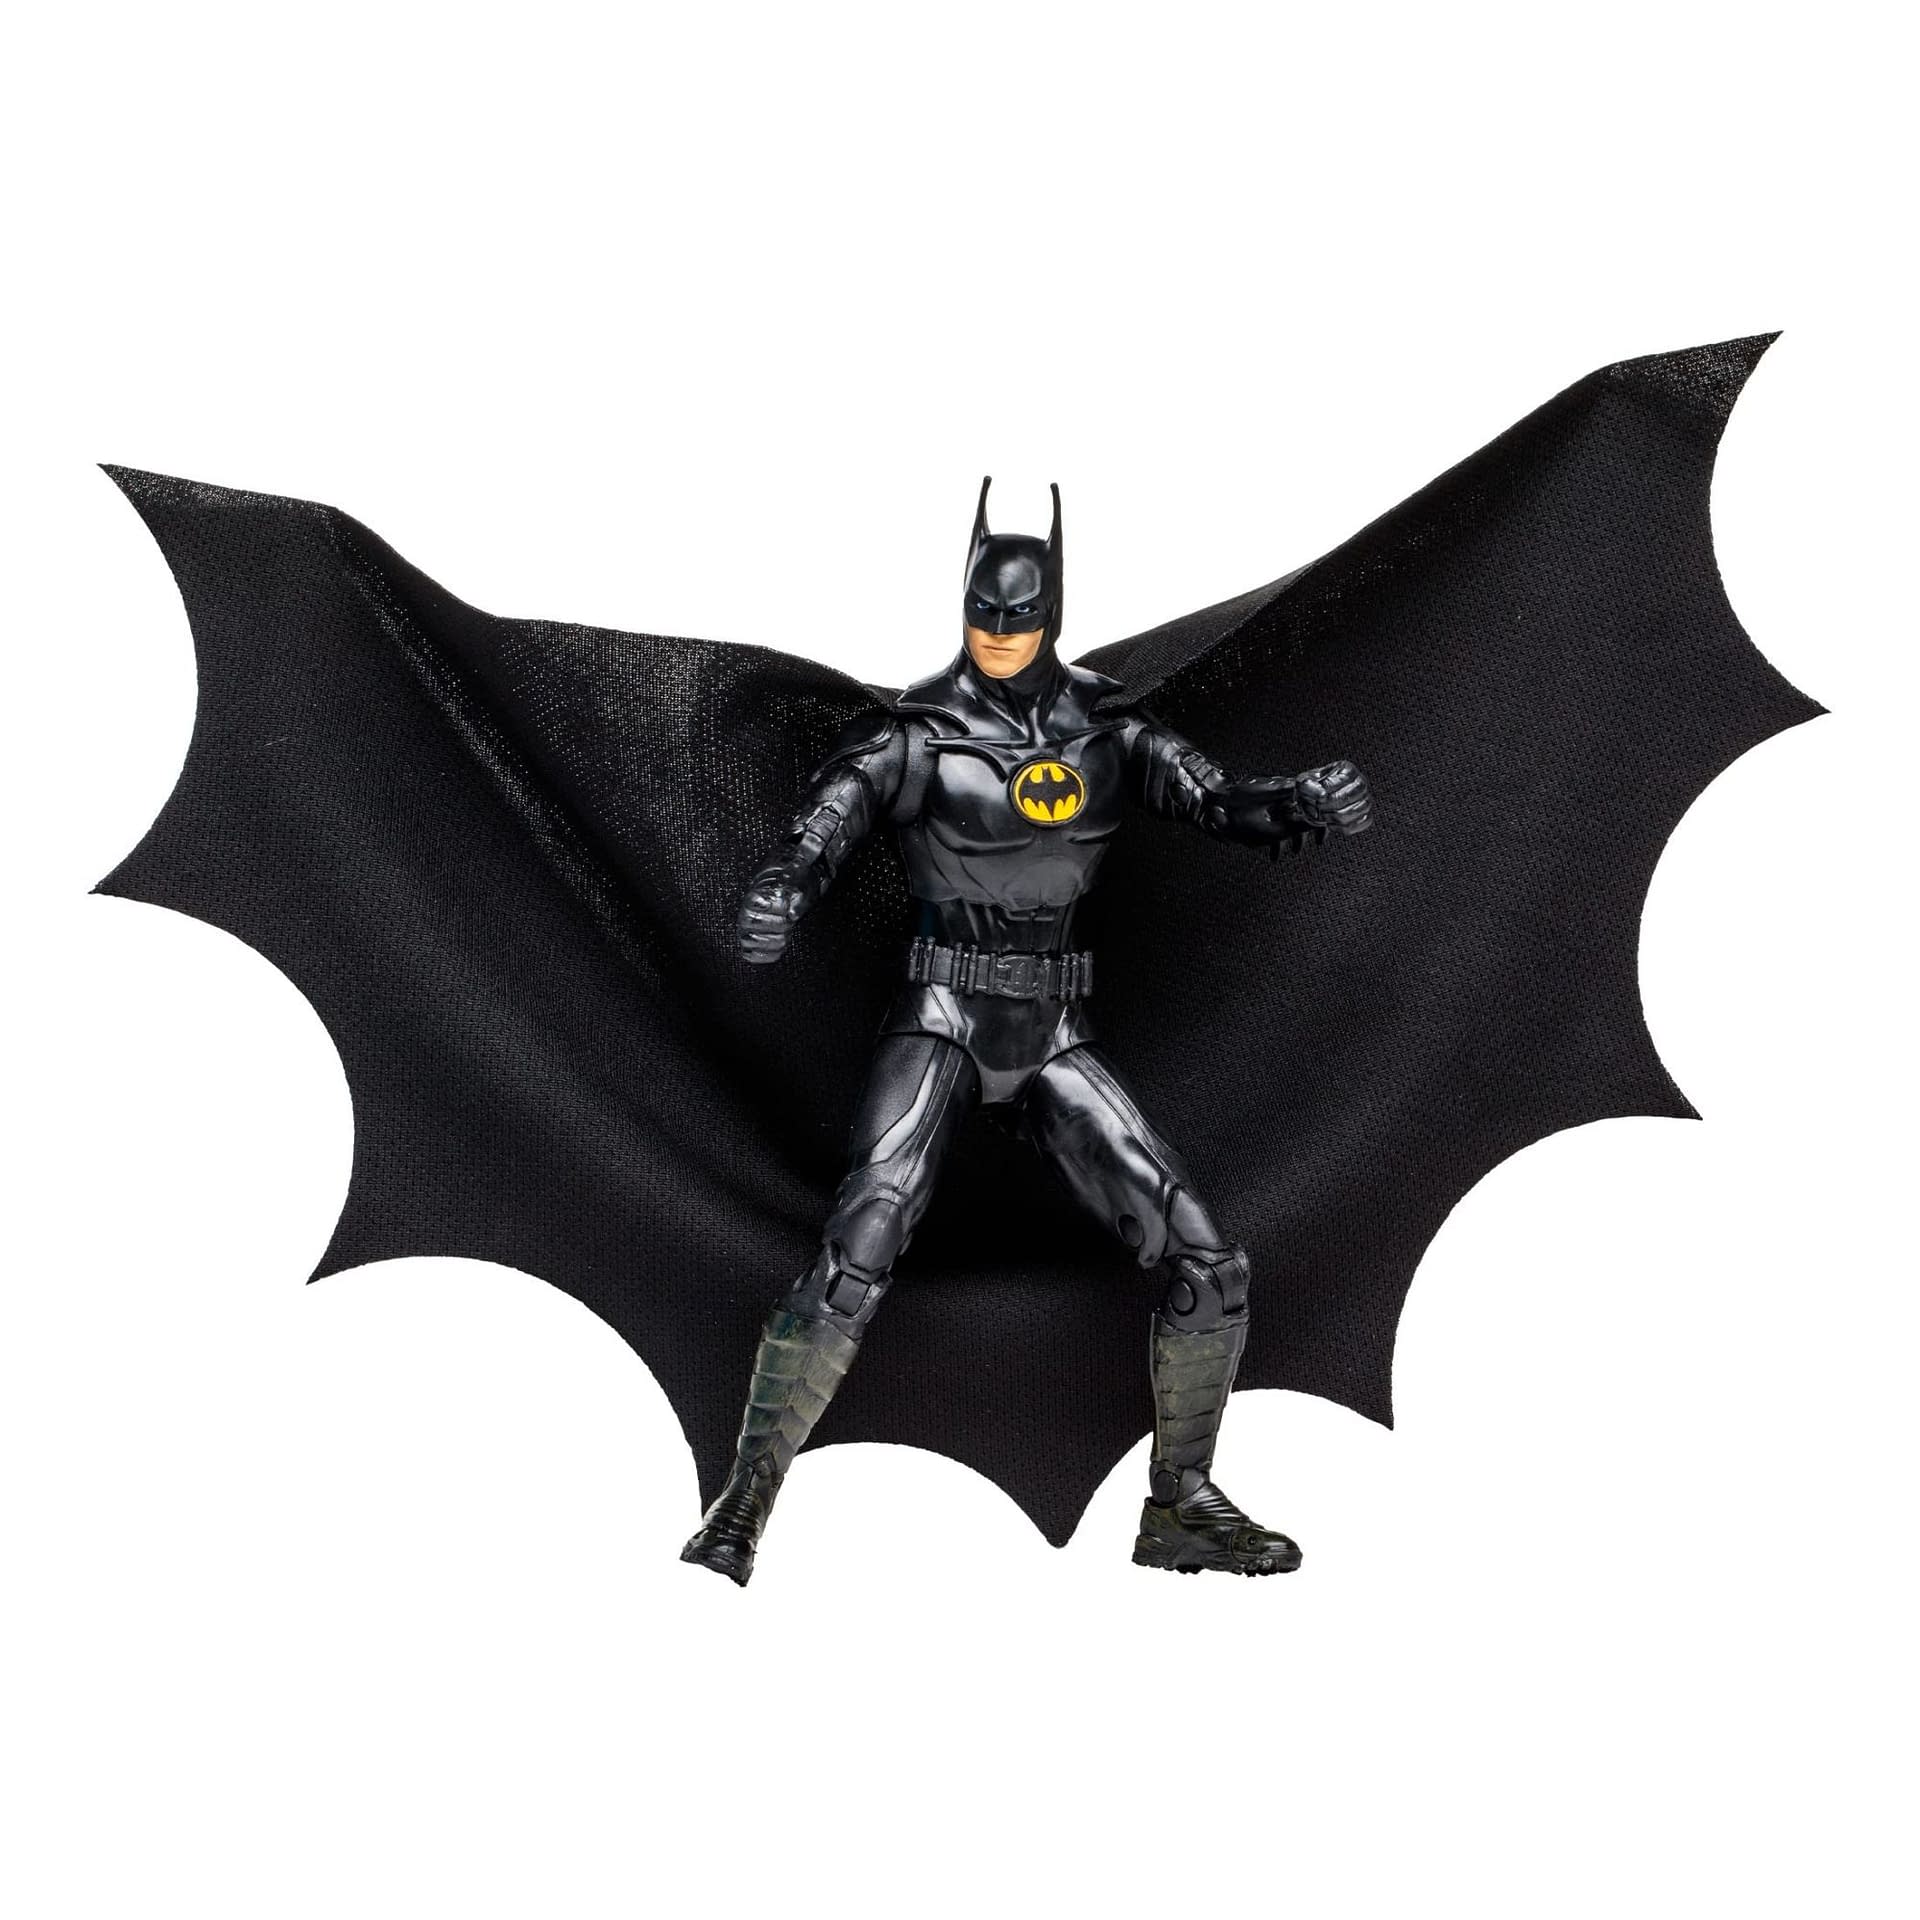 Keaton Batman The Flash Figure Coming Soon from McFarlane Toys 